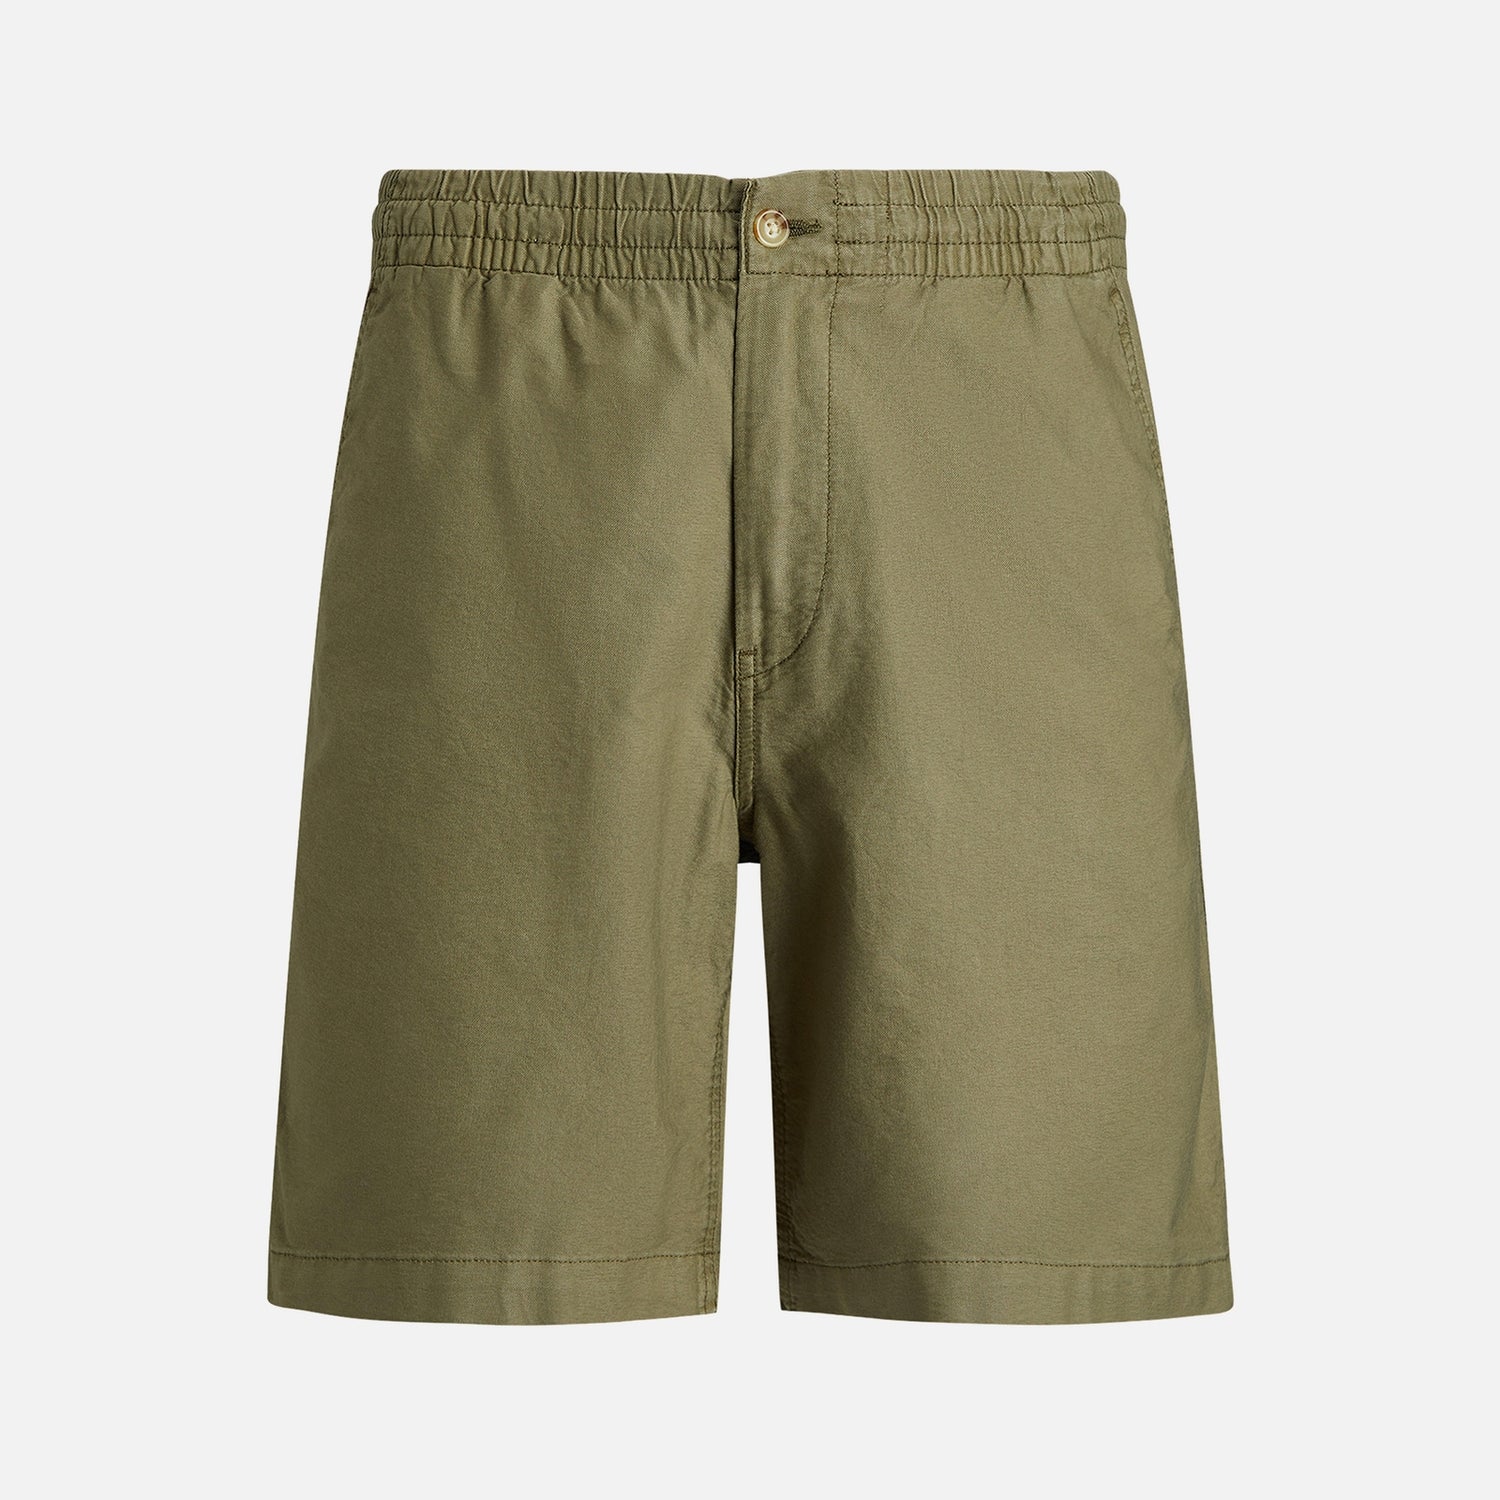 Polo Ralph Lauren Prepster Oxford Cotton Shorts - S